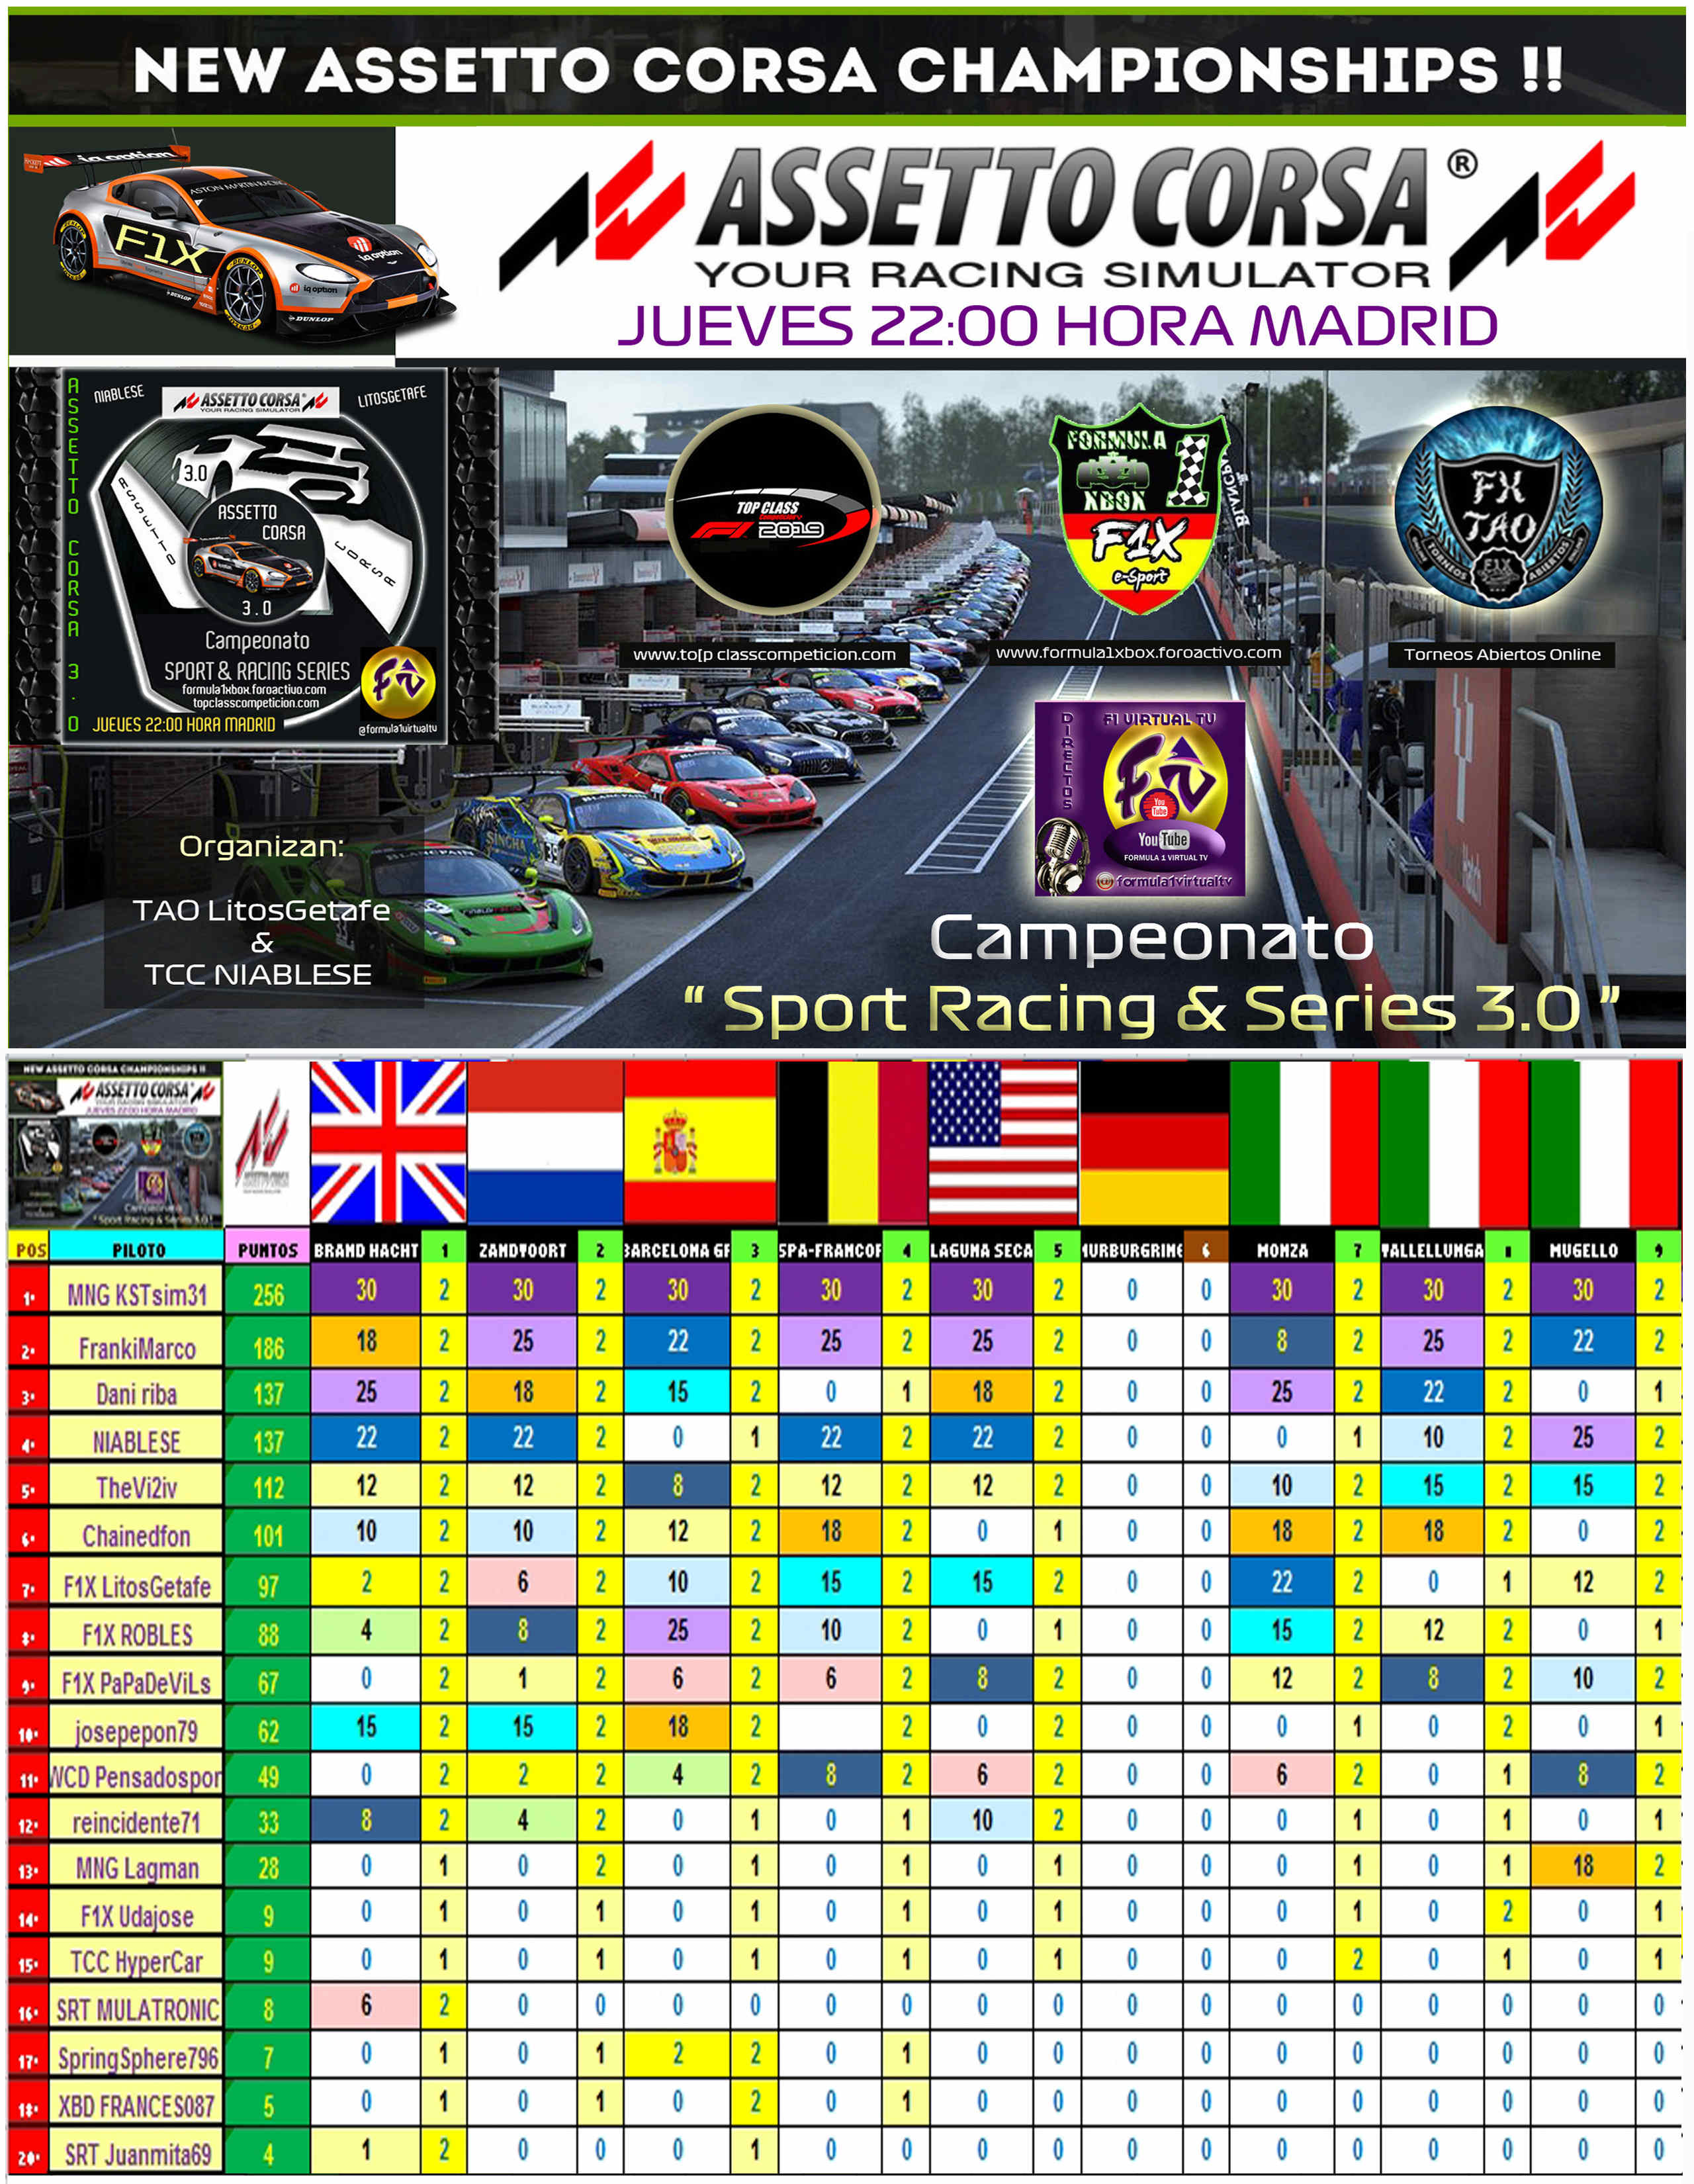 ASSETTO CORSA /// CAMPEONATO SPORT & RACING SERIES 3.0 /// RACE 9 MUGELLO  12 - 12 - 2019 / RESULTADOS + PODIUM + CLASIFICACION GENERAL. Clasi_31